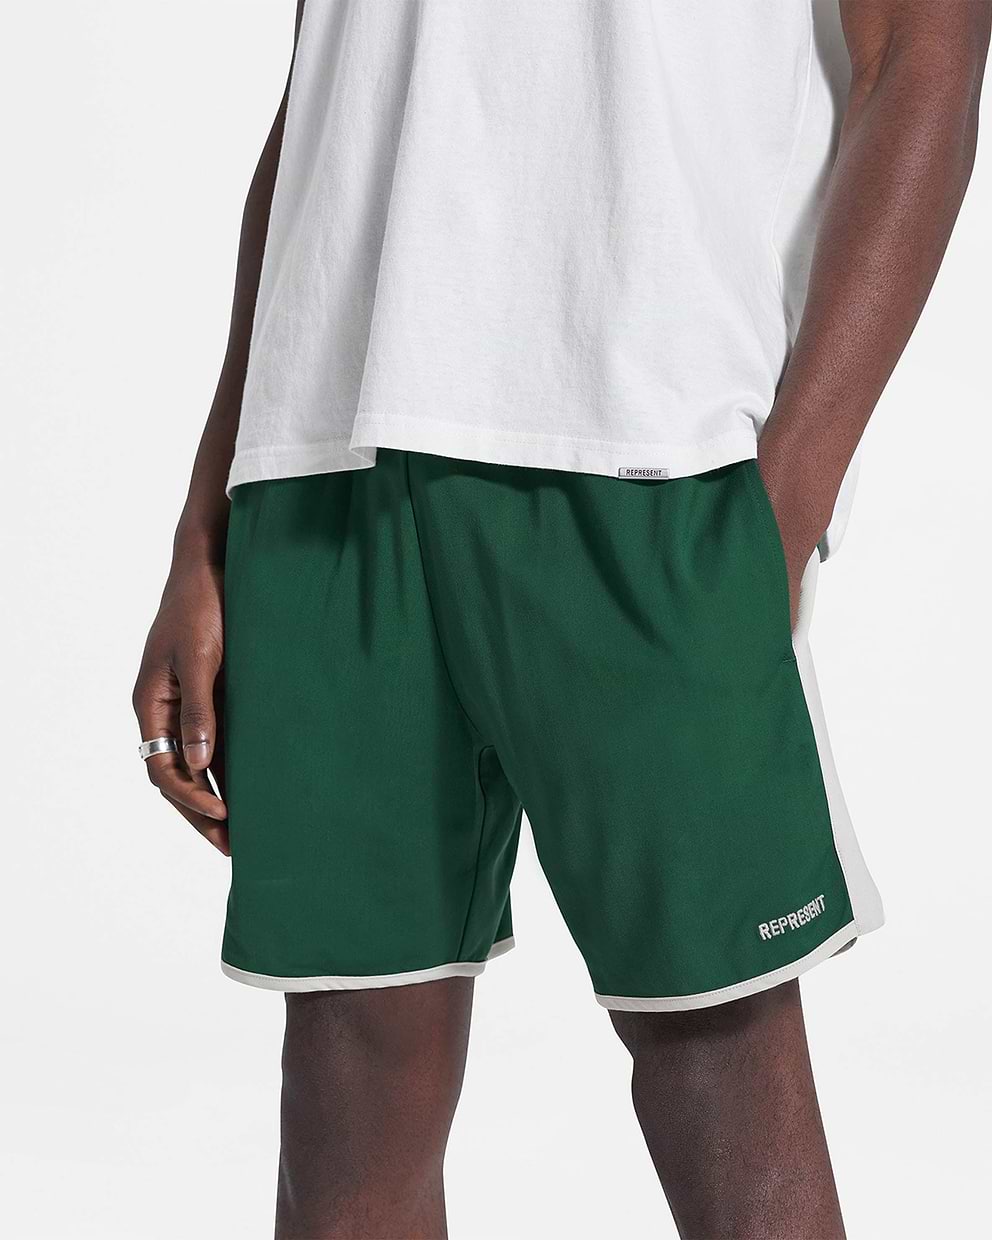 Souvenir Shorts - Racing Green